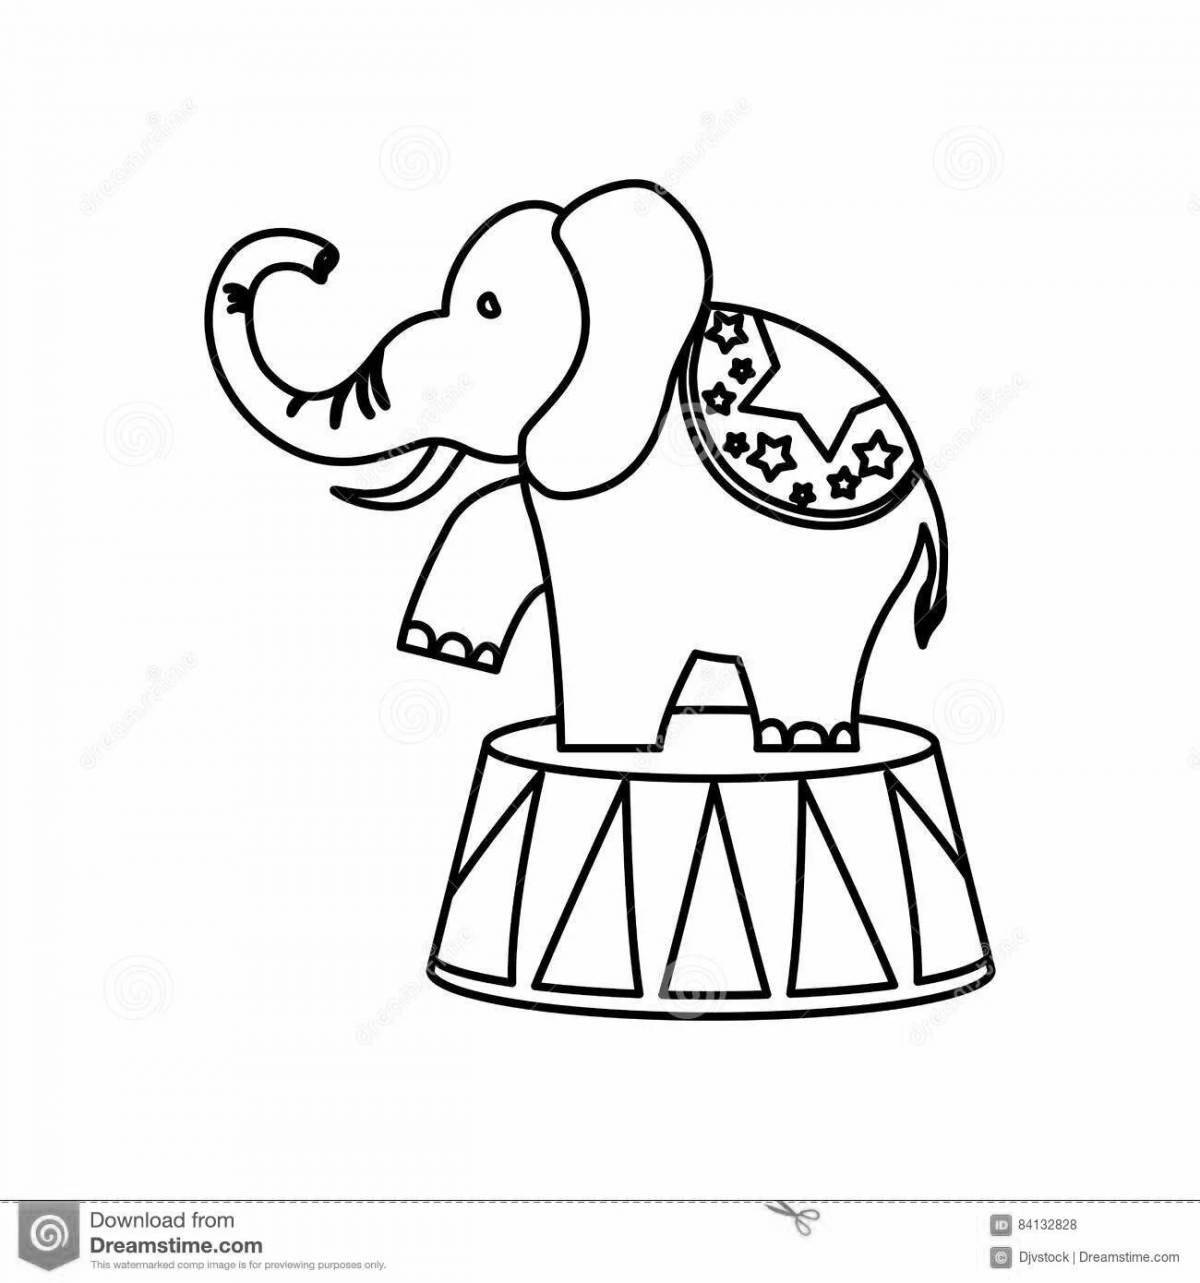 Coloring book shining circus elephant